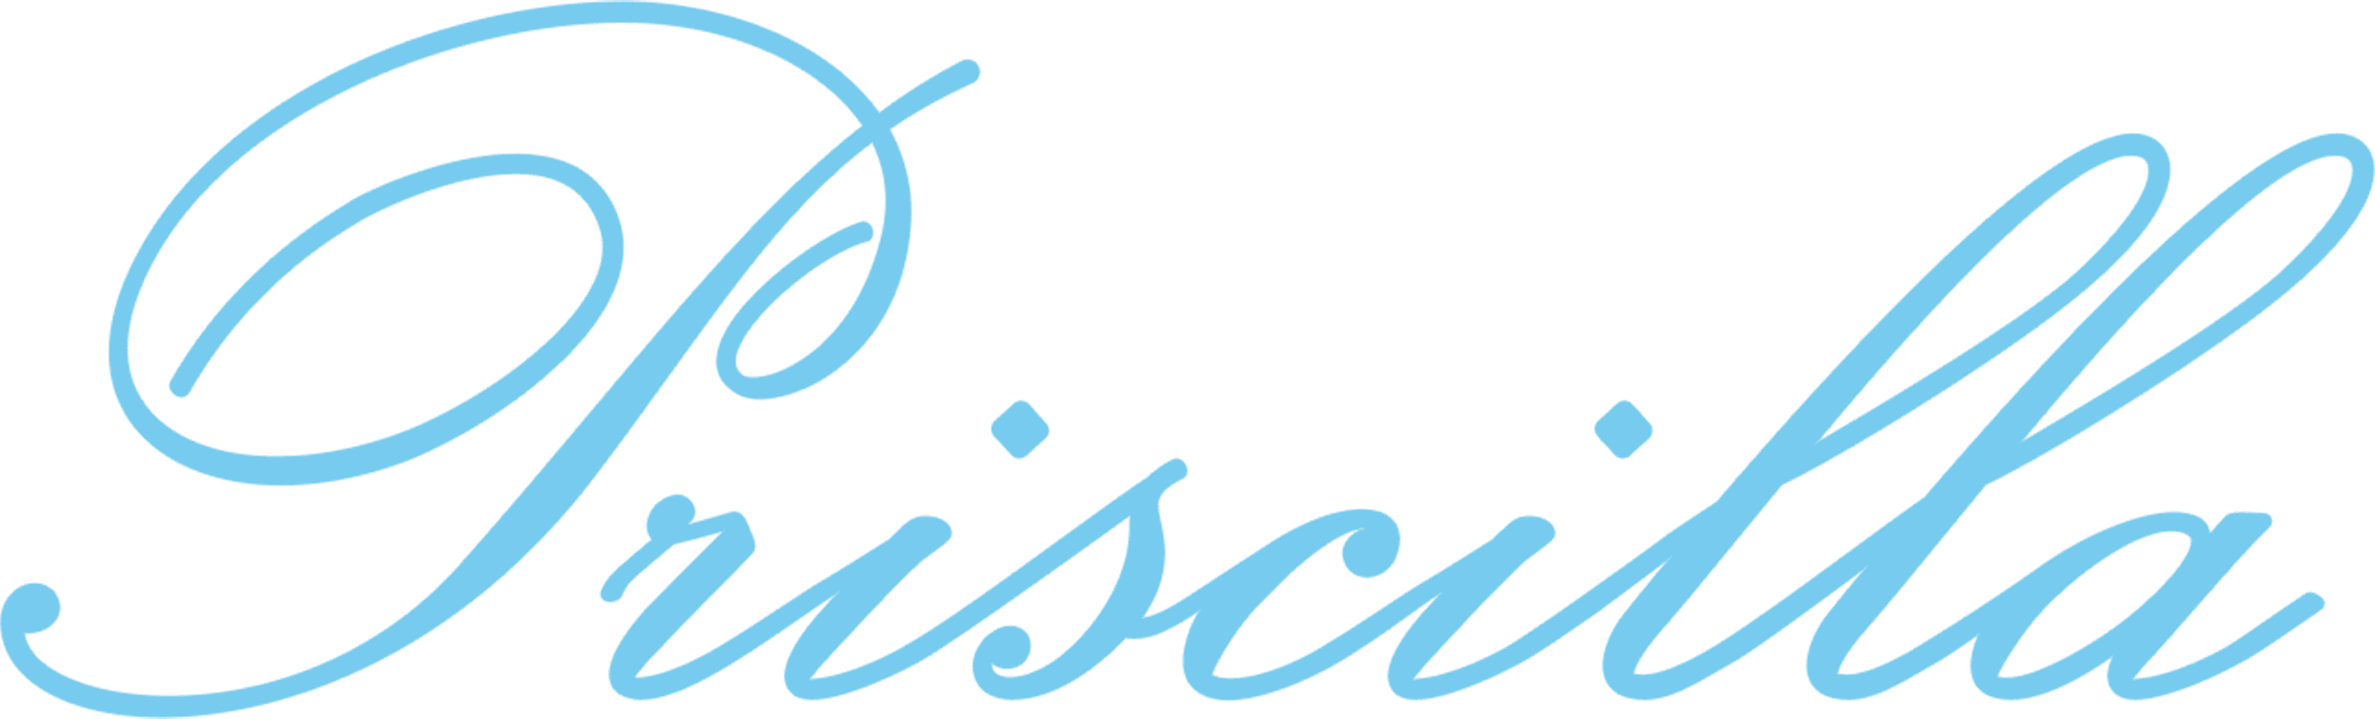 Priscilla logo